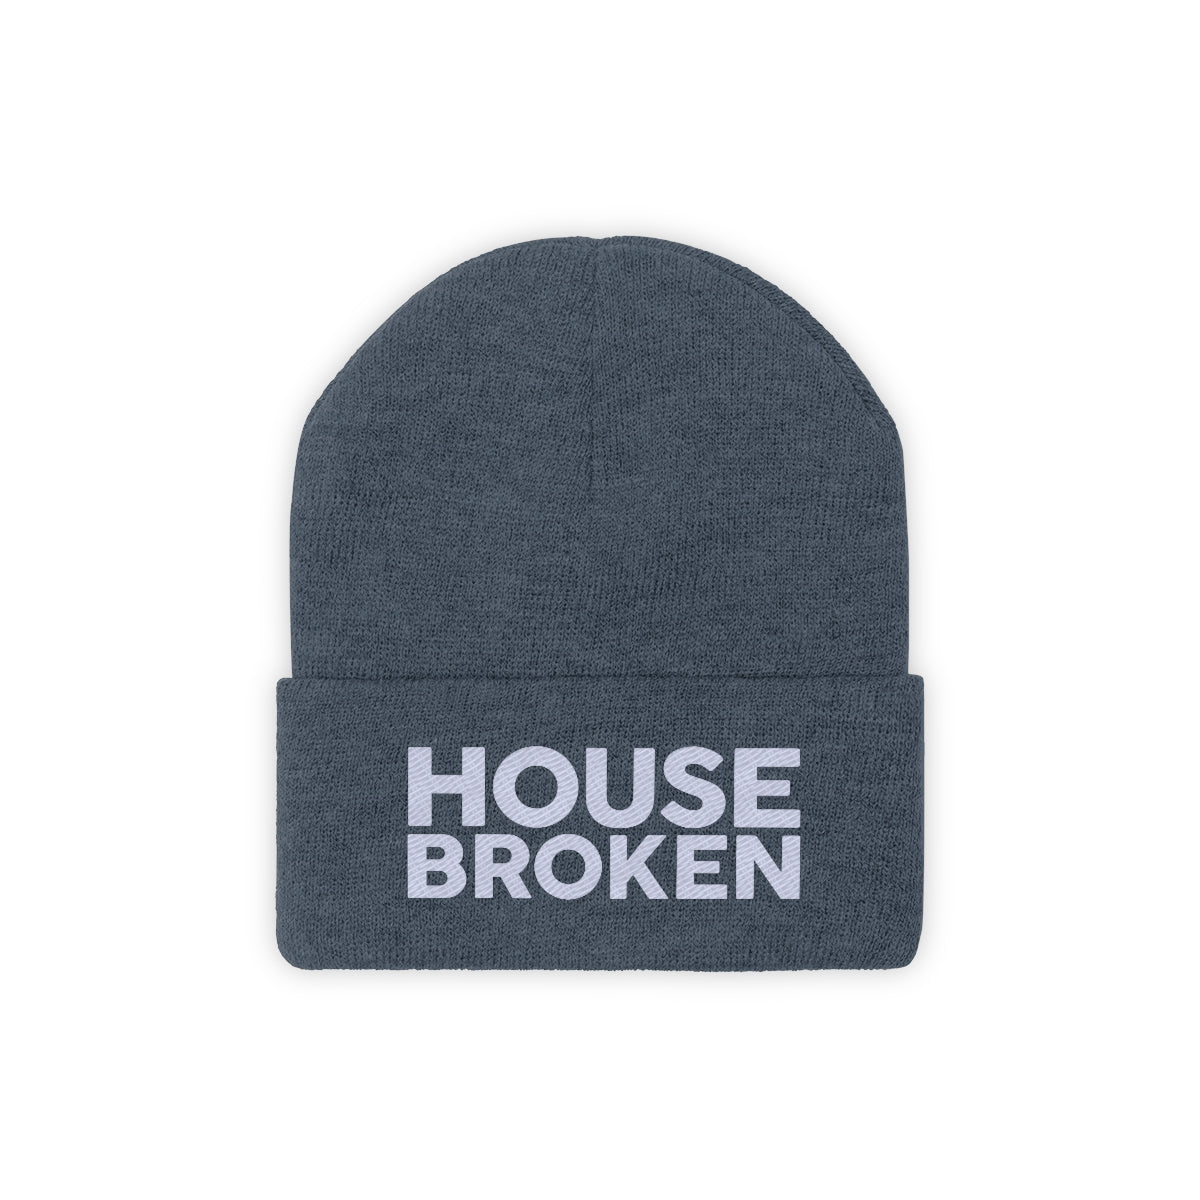 HOUSE BROKEN – Knit Beanie